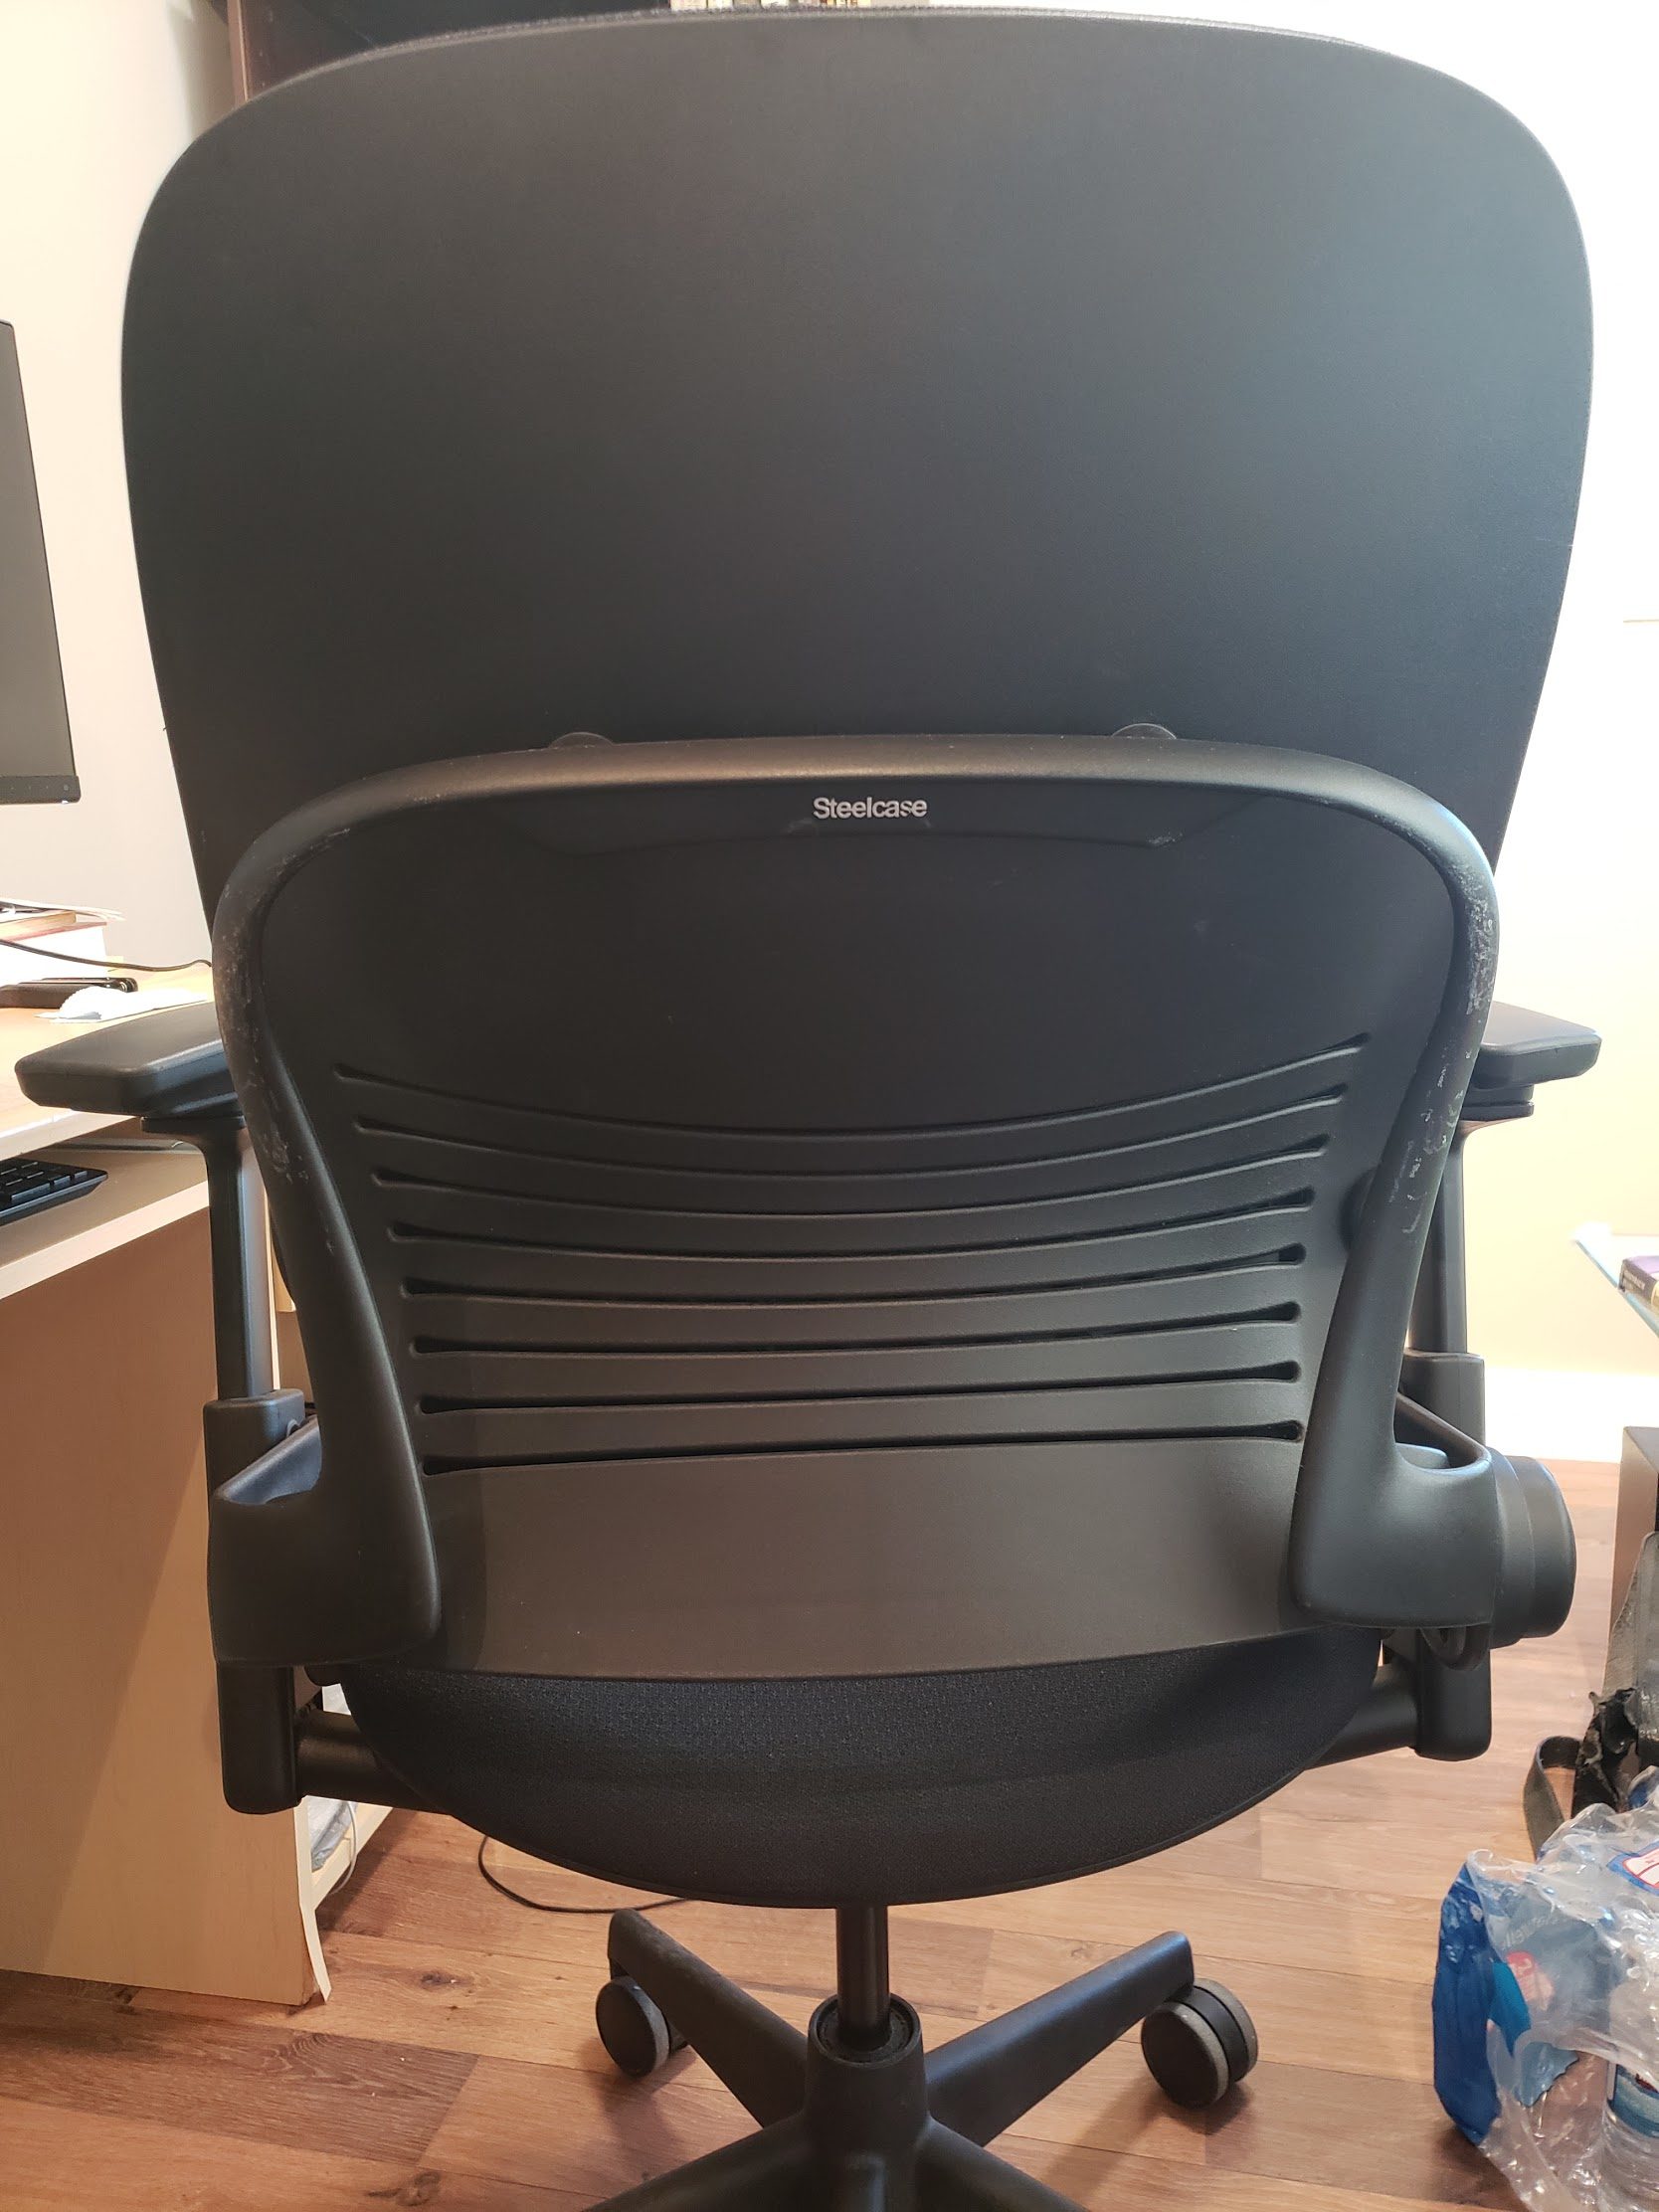 Steelcase Leap V2 Ergonomic Chair 330 Sold For Sale Redflagdeals Com Forums